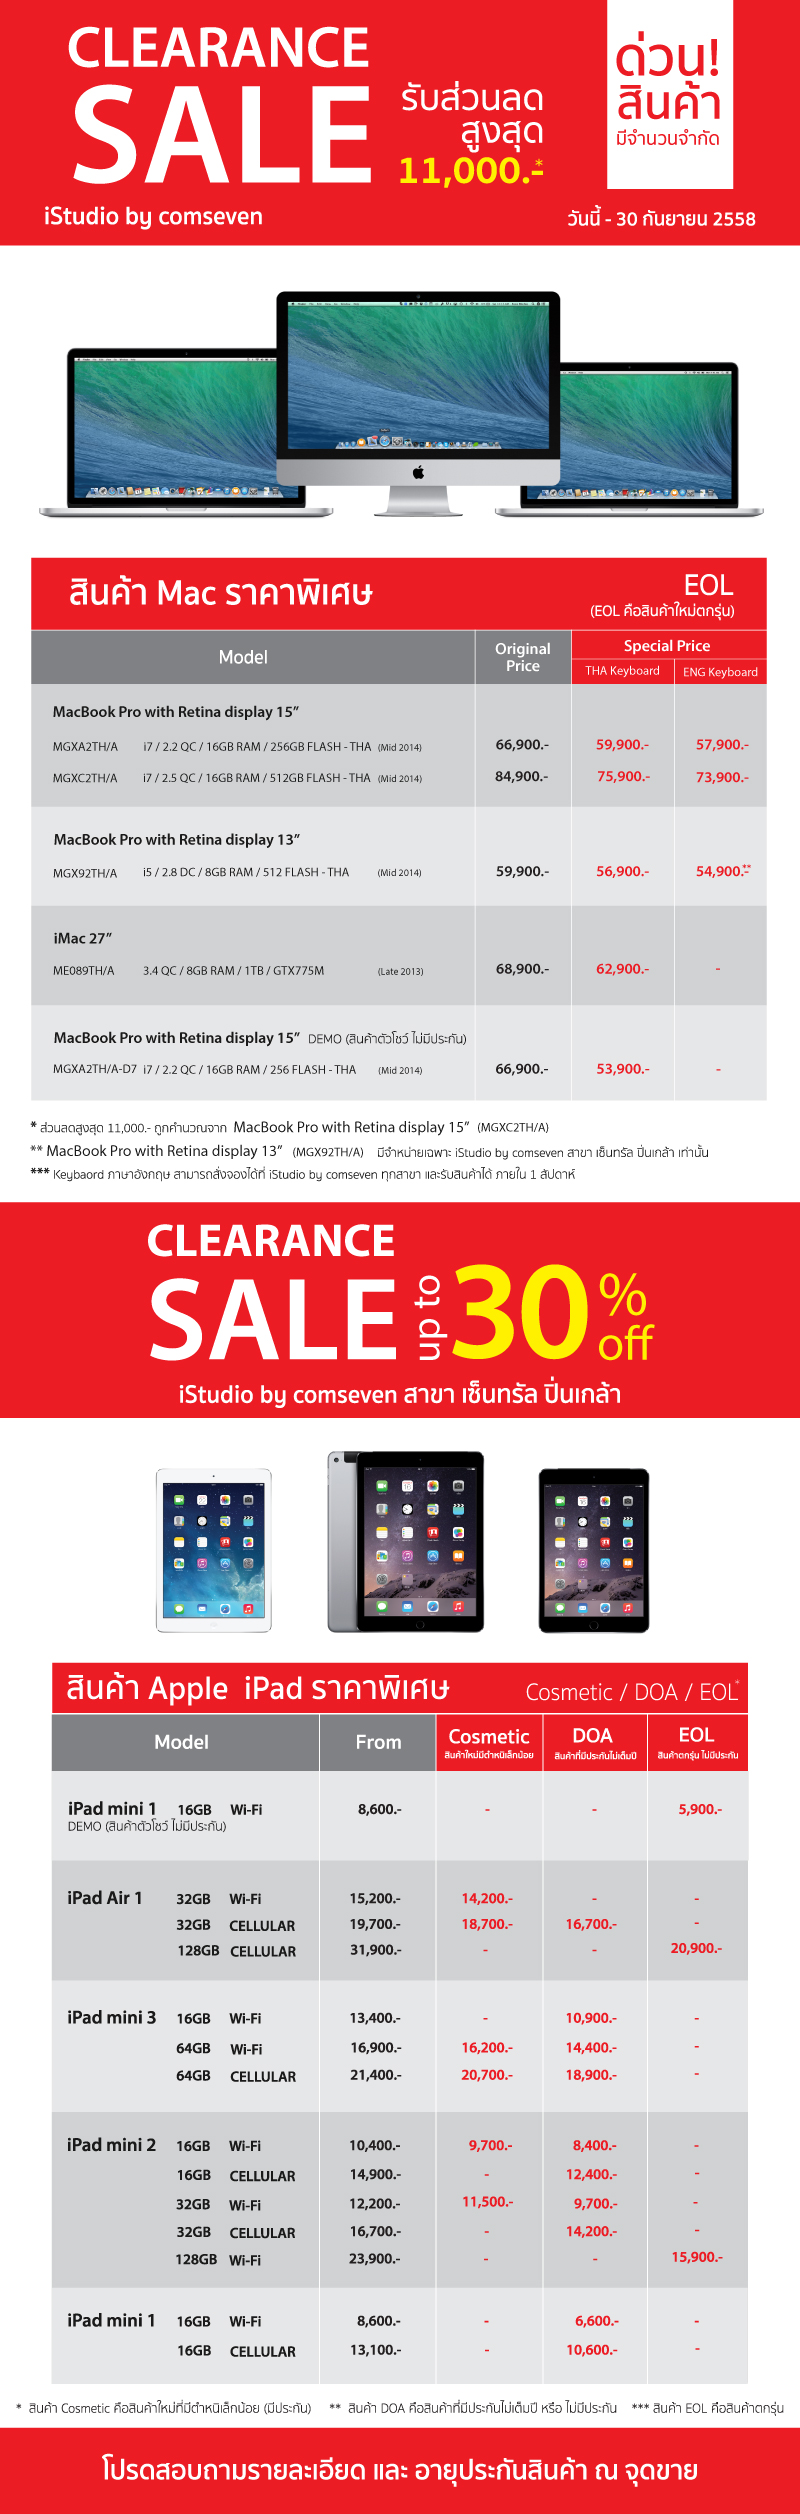 [PR] Clearance Sale ลดกระหน่ำ ล้างสต๊อก Mac iPad รับส่วนลดสูงสุด 11,000.- ที่ร้าน iStudio by comseven